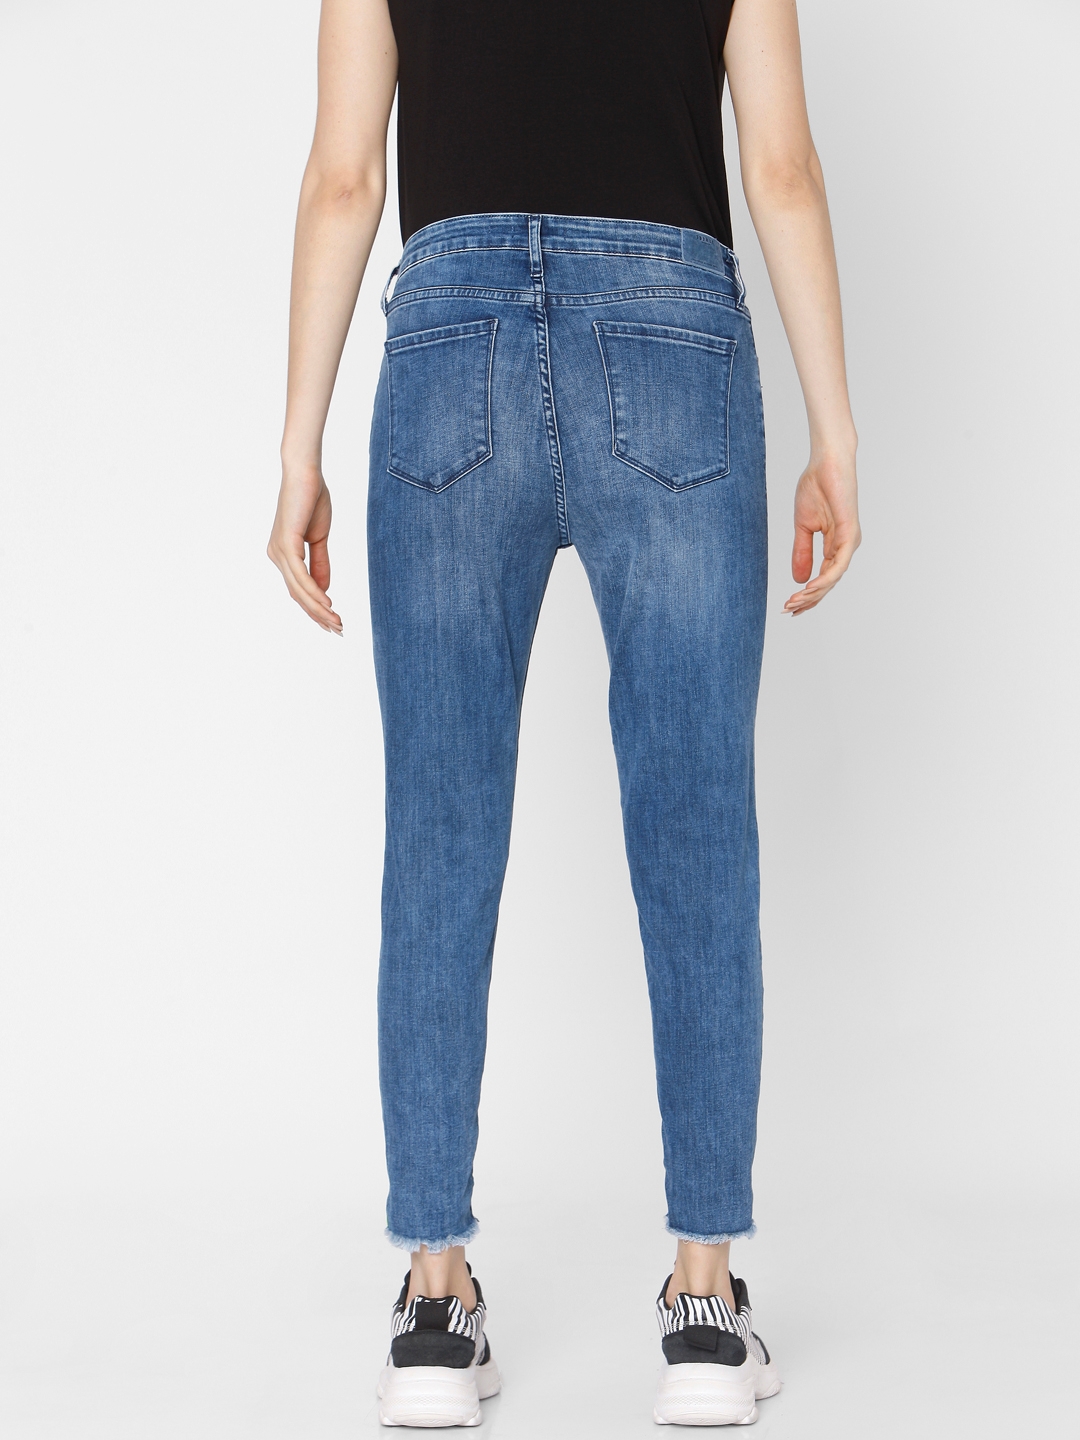 spykar | Women's Blue Cotton Ripped Skinny Jeans 4